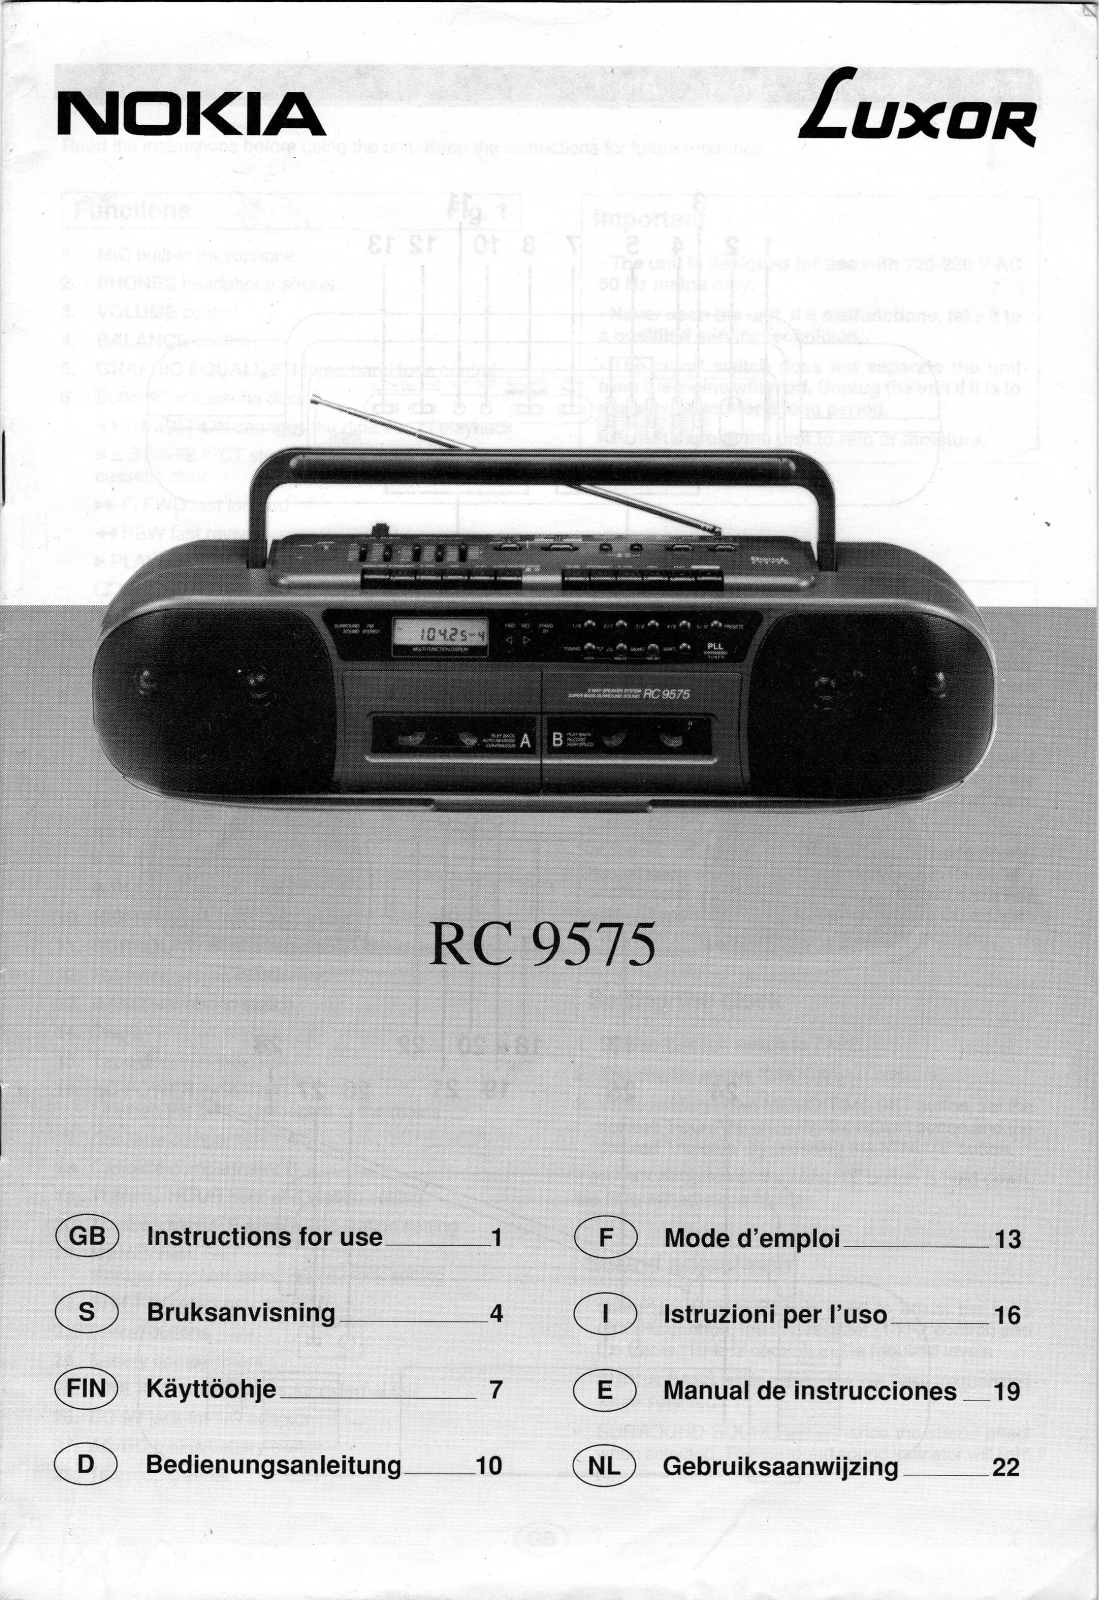 Nokia RC 9575 User Guide